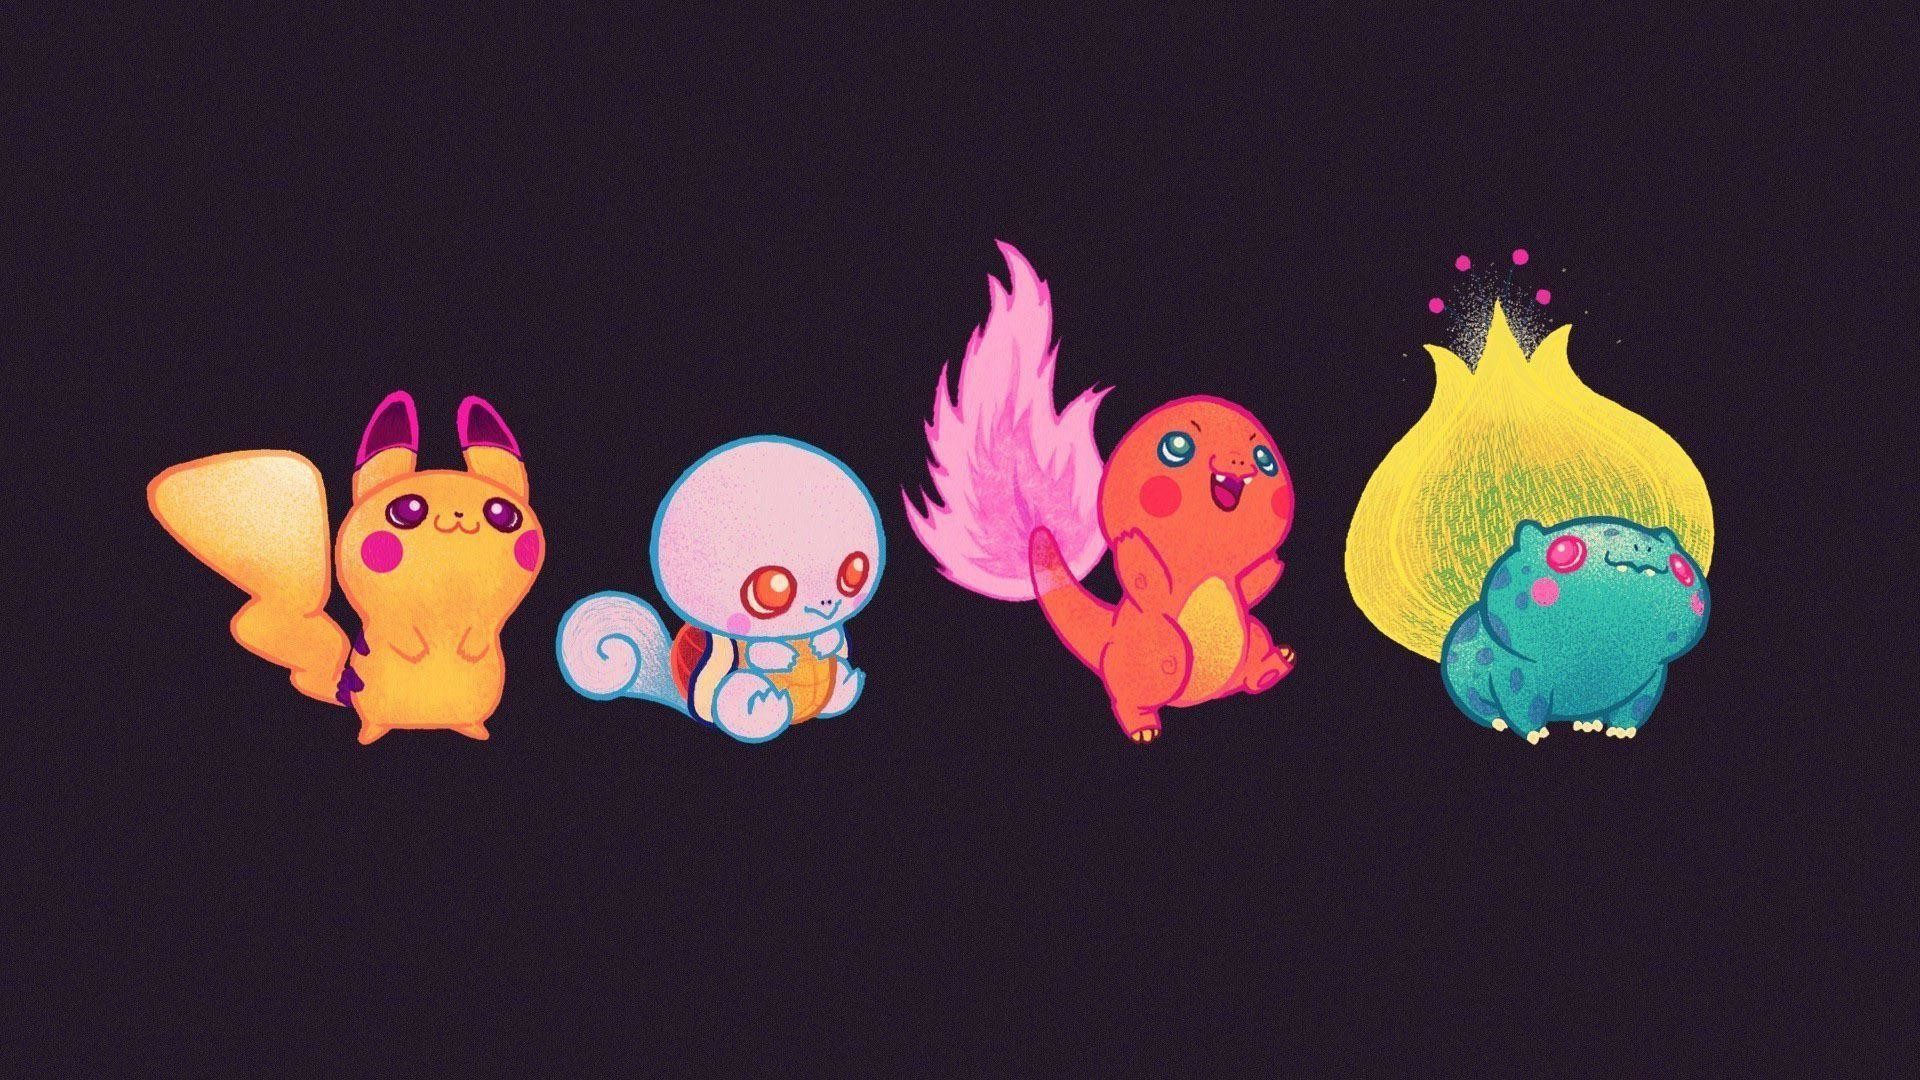 Cute baby pokemon 15312 Pikachu Wallpapers HD free wallpapers